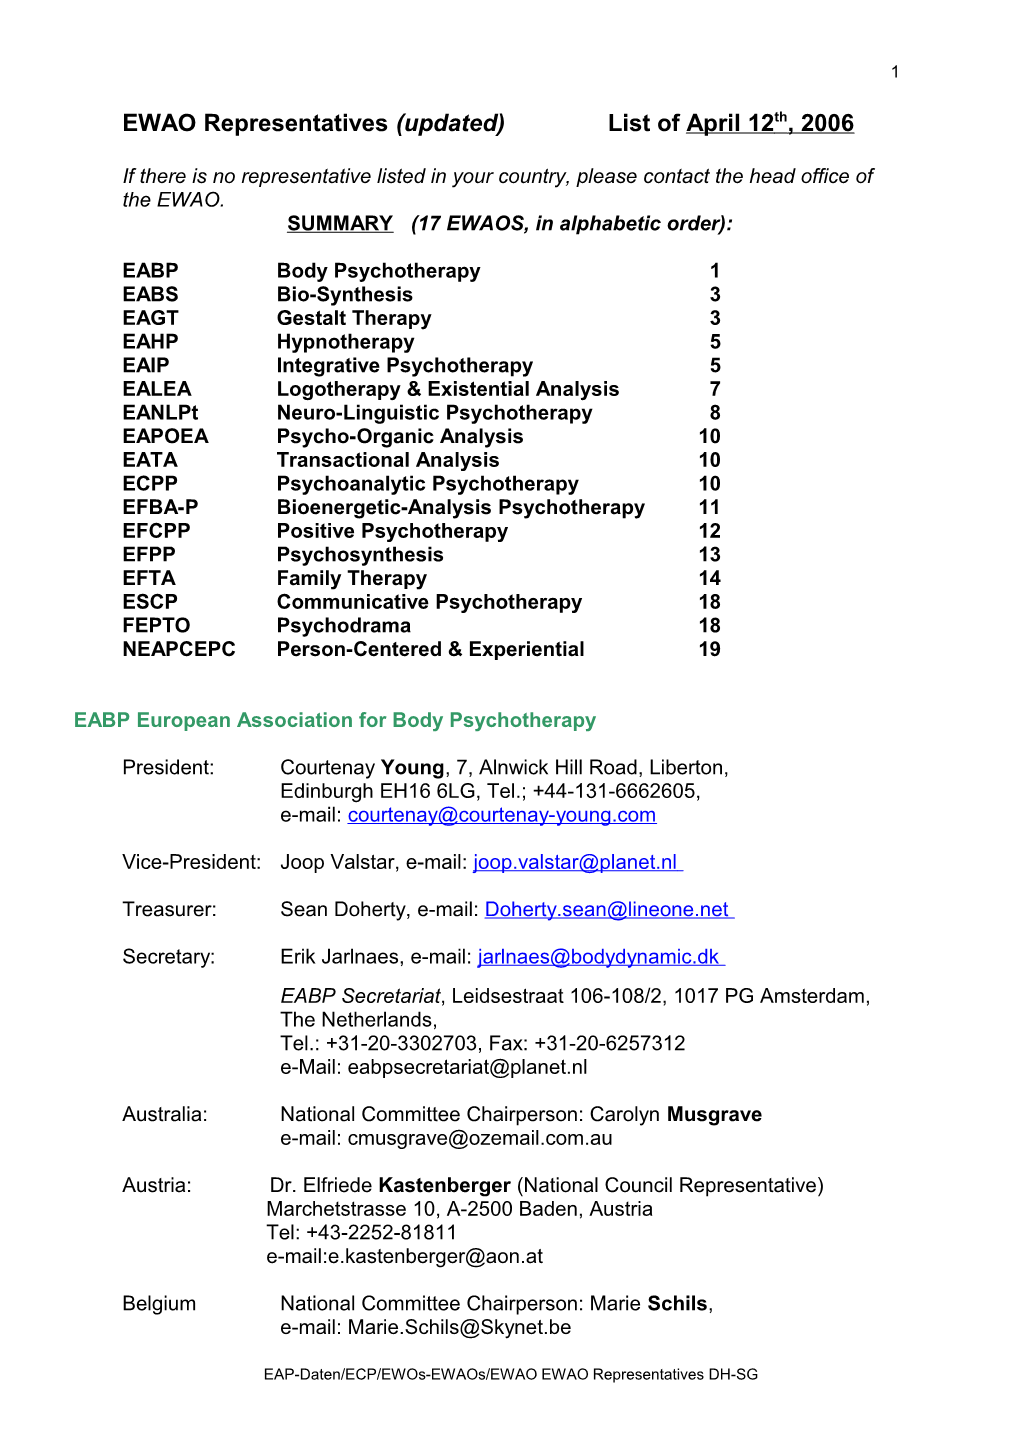 EWAO Representatives (Updated) List of April 12Th, 2006